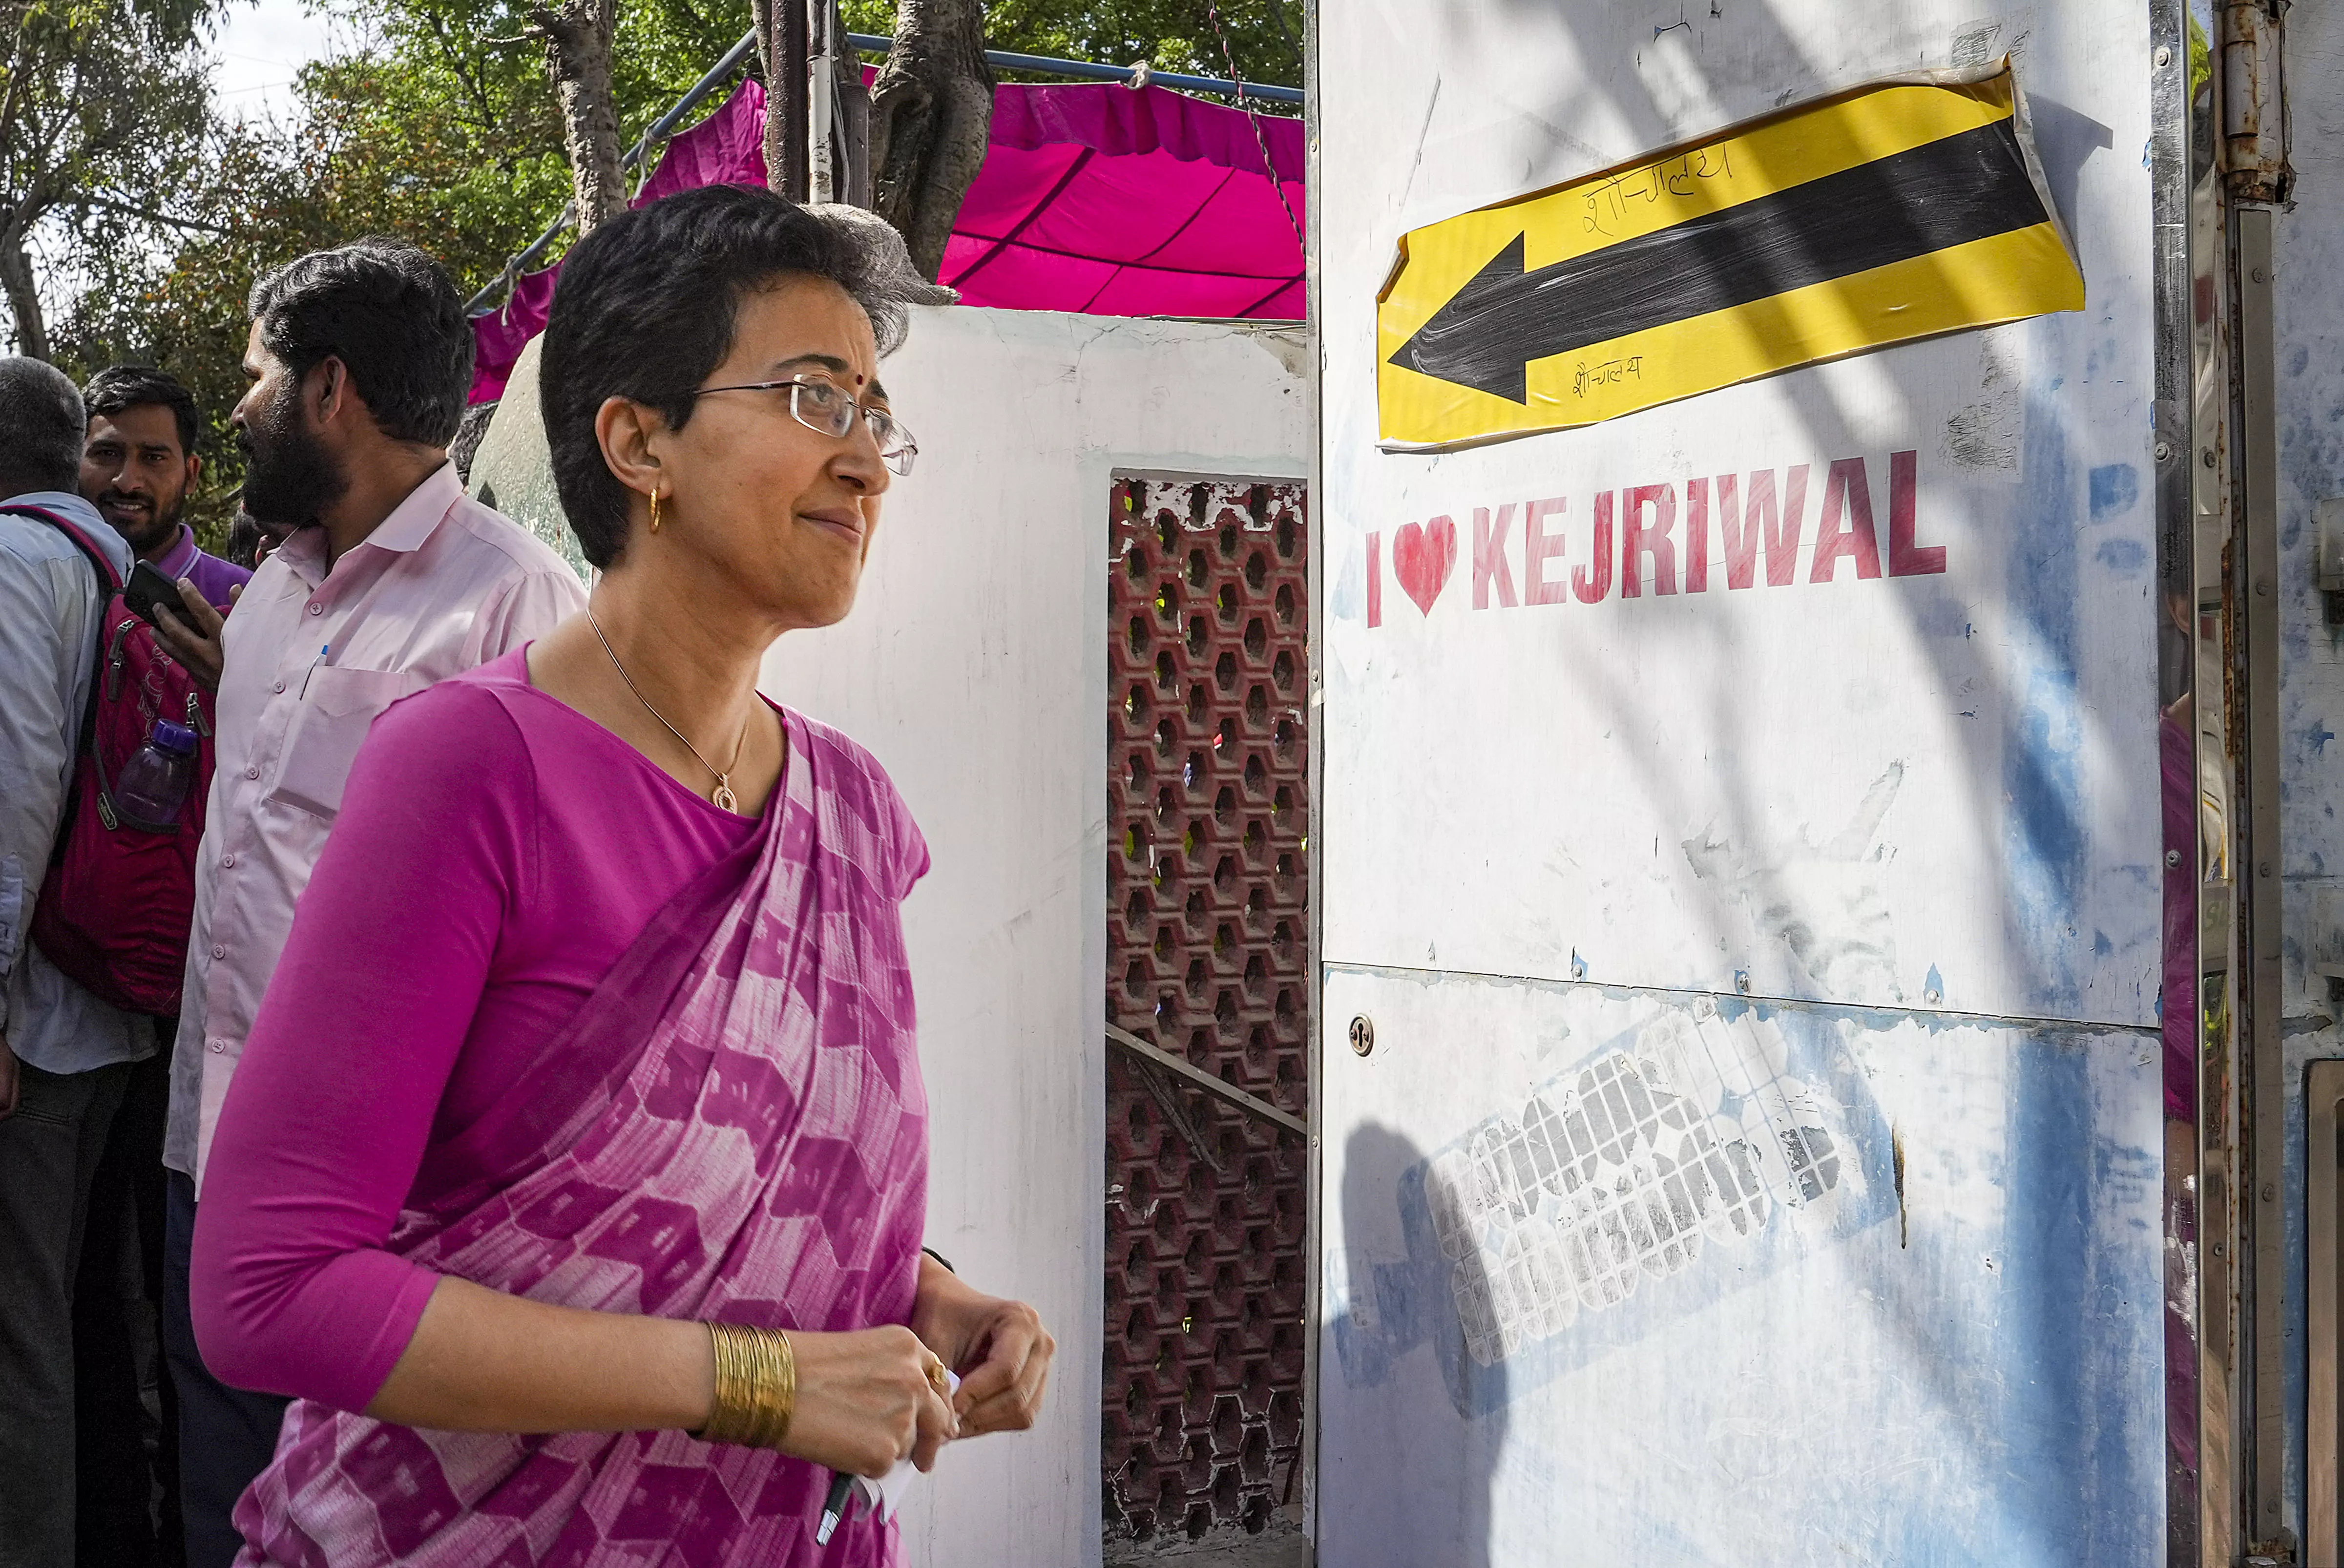 Kejriwal lost 4.5 kg in jail, BJP putting his health at risk: AAP